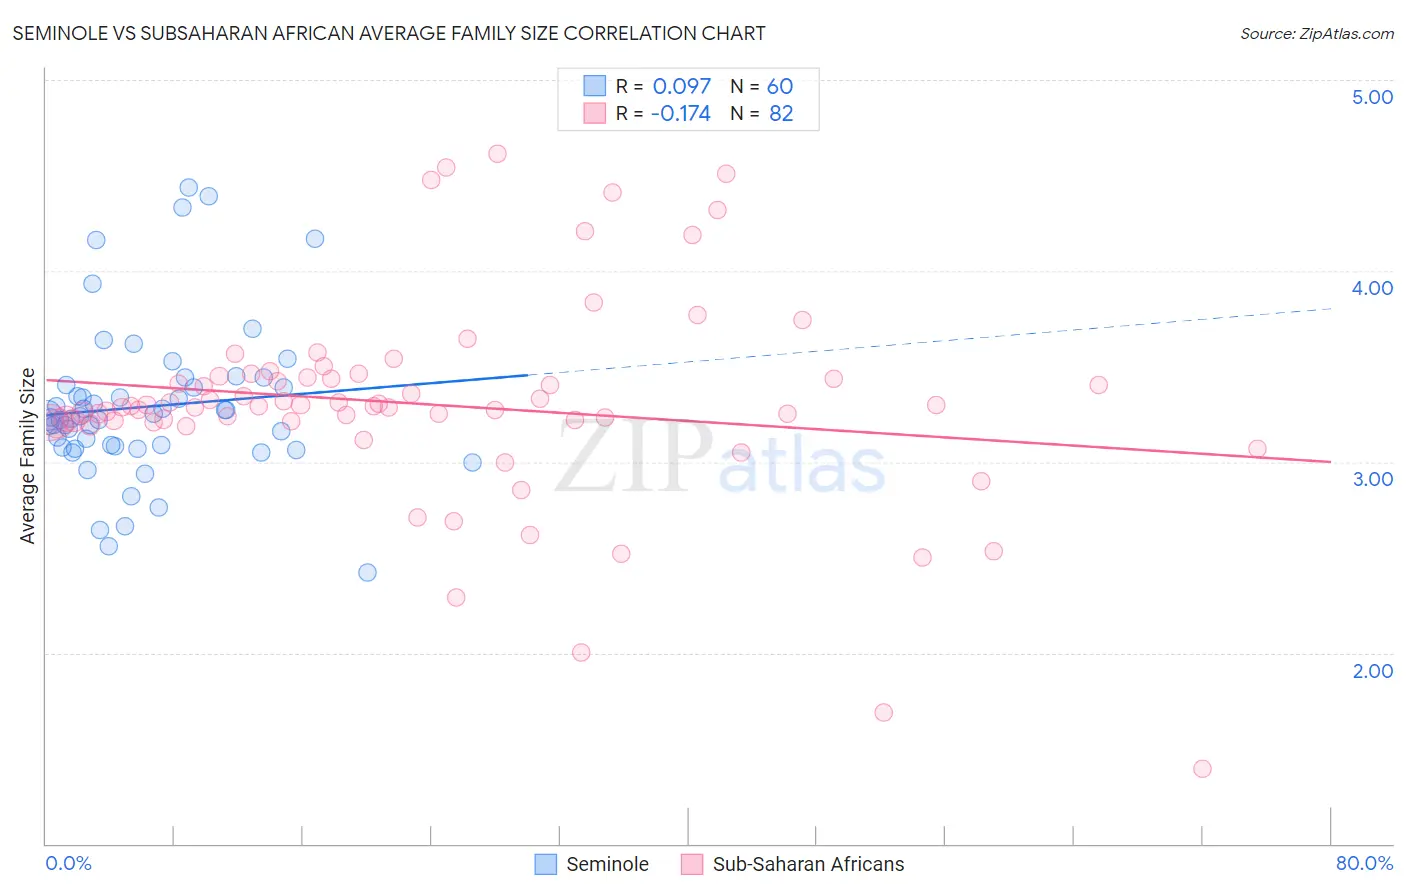 Seminole vs Subsaharan African Average Family Size